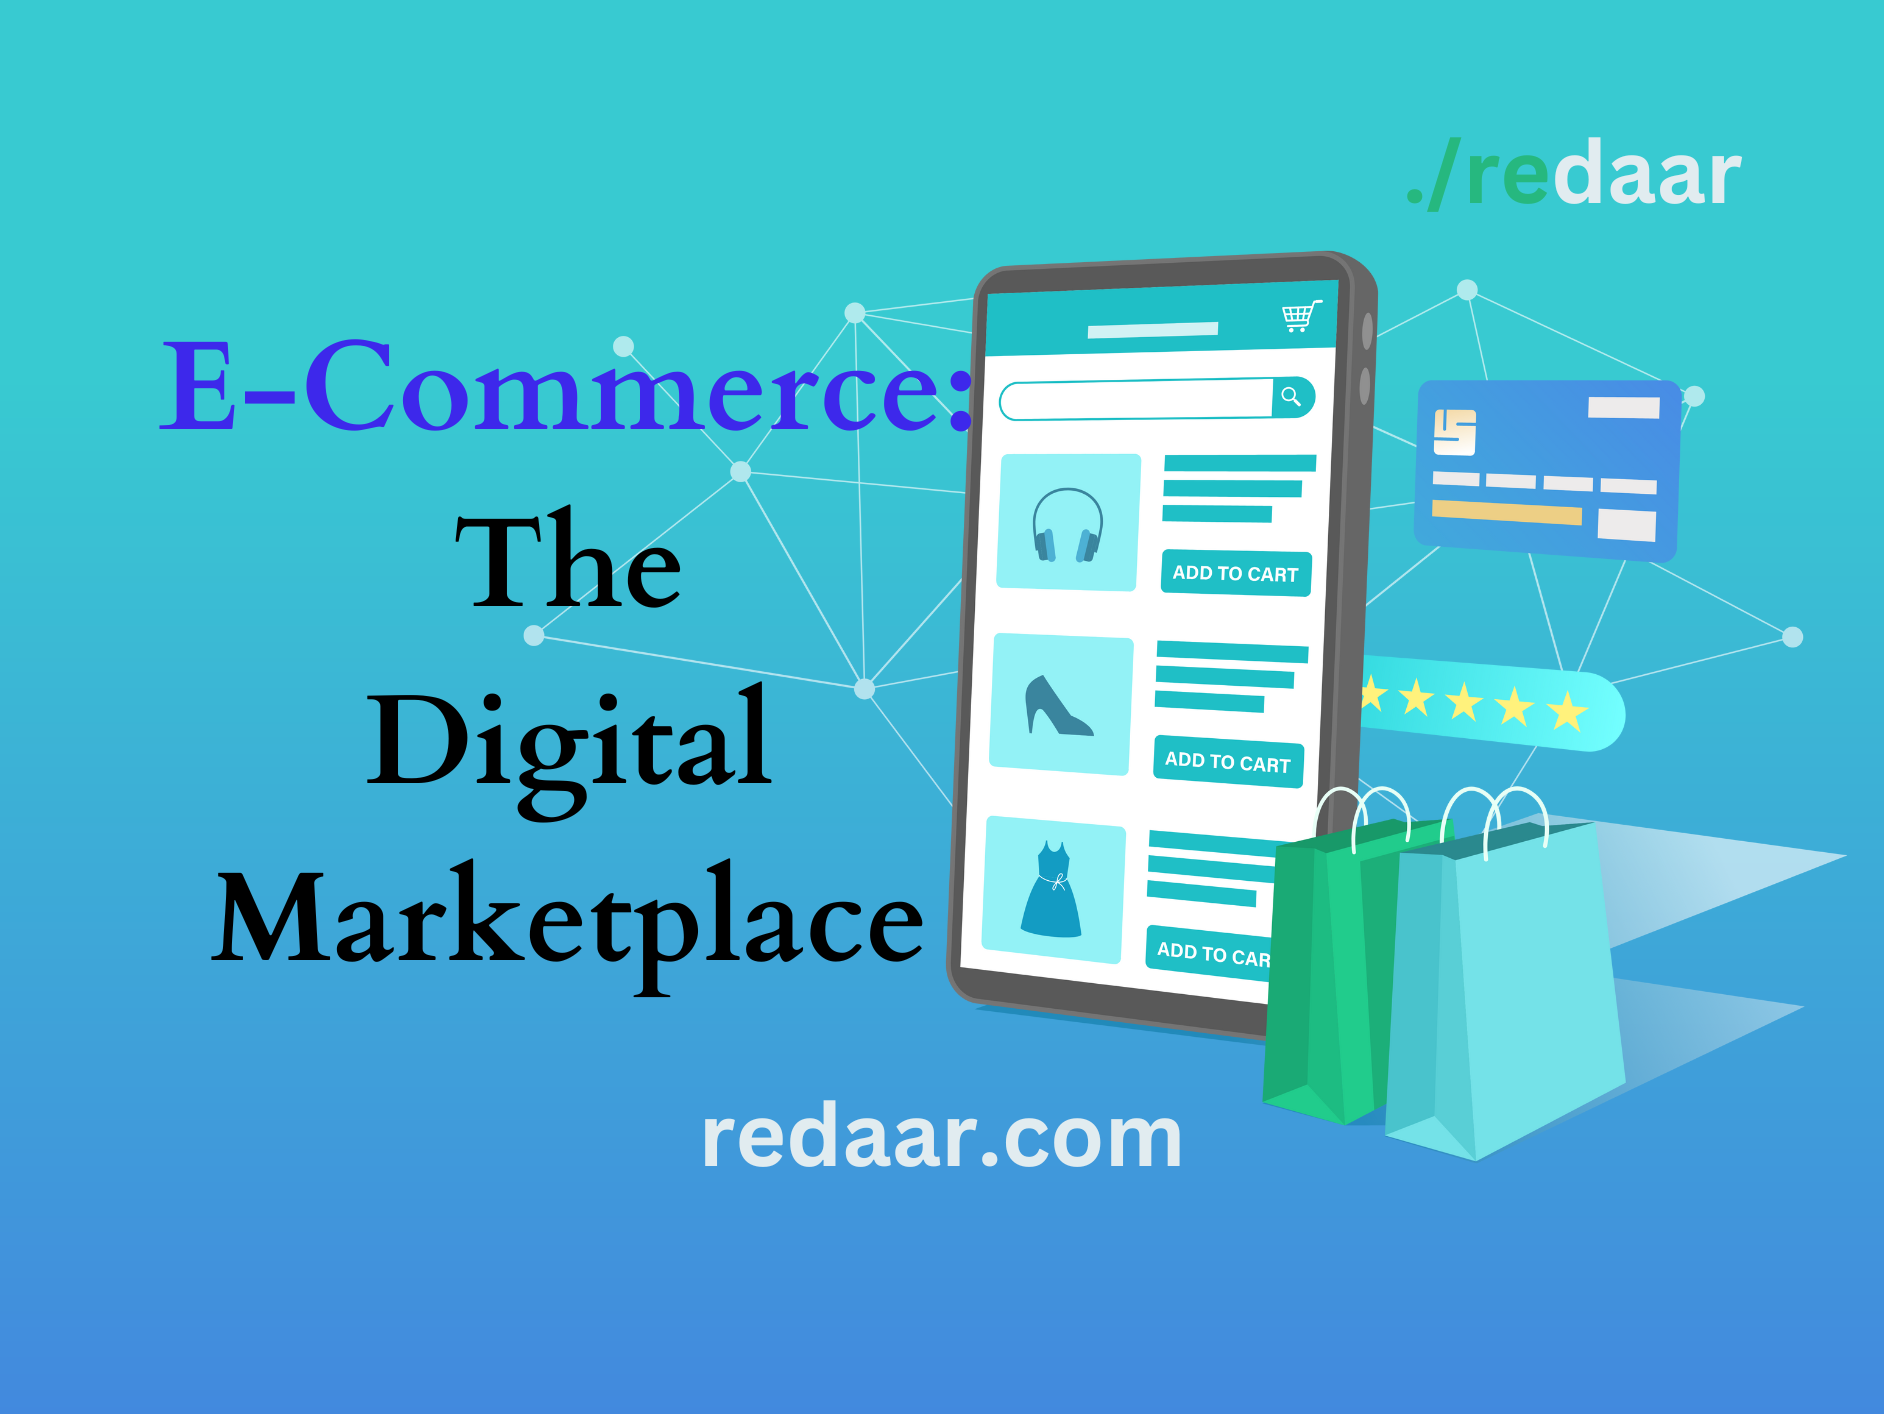 E-Commerce: The Digital Marketplace